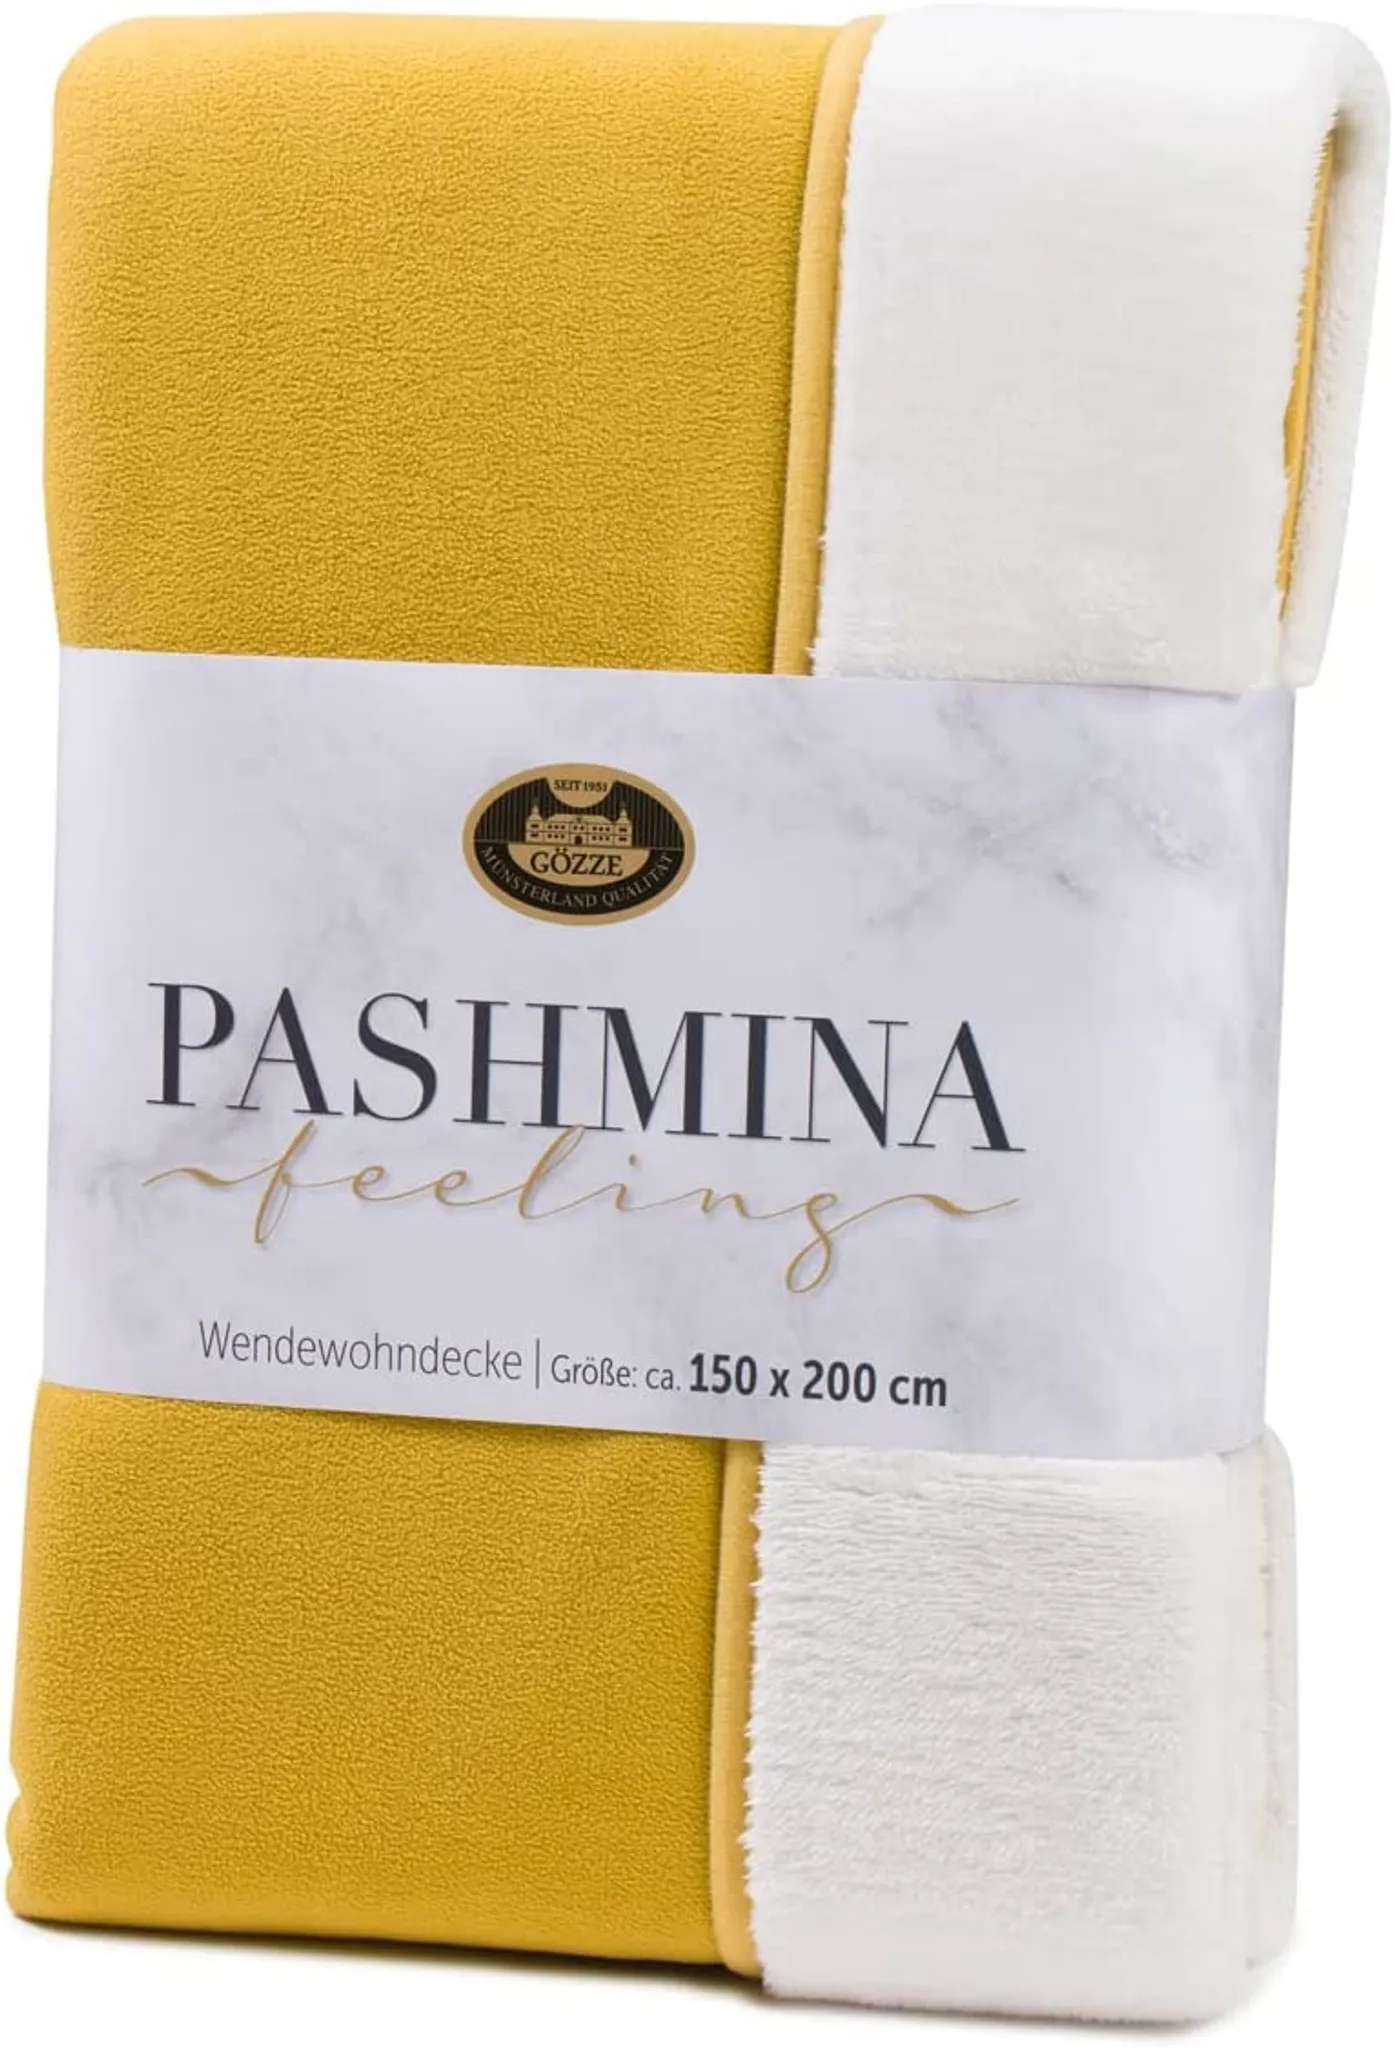 Gözze Wendewohndecke Pashmina-Feeling uni 150